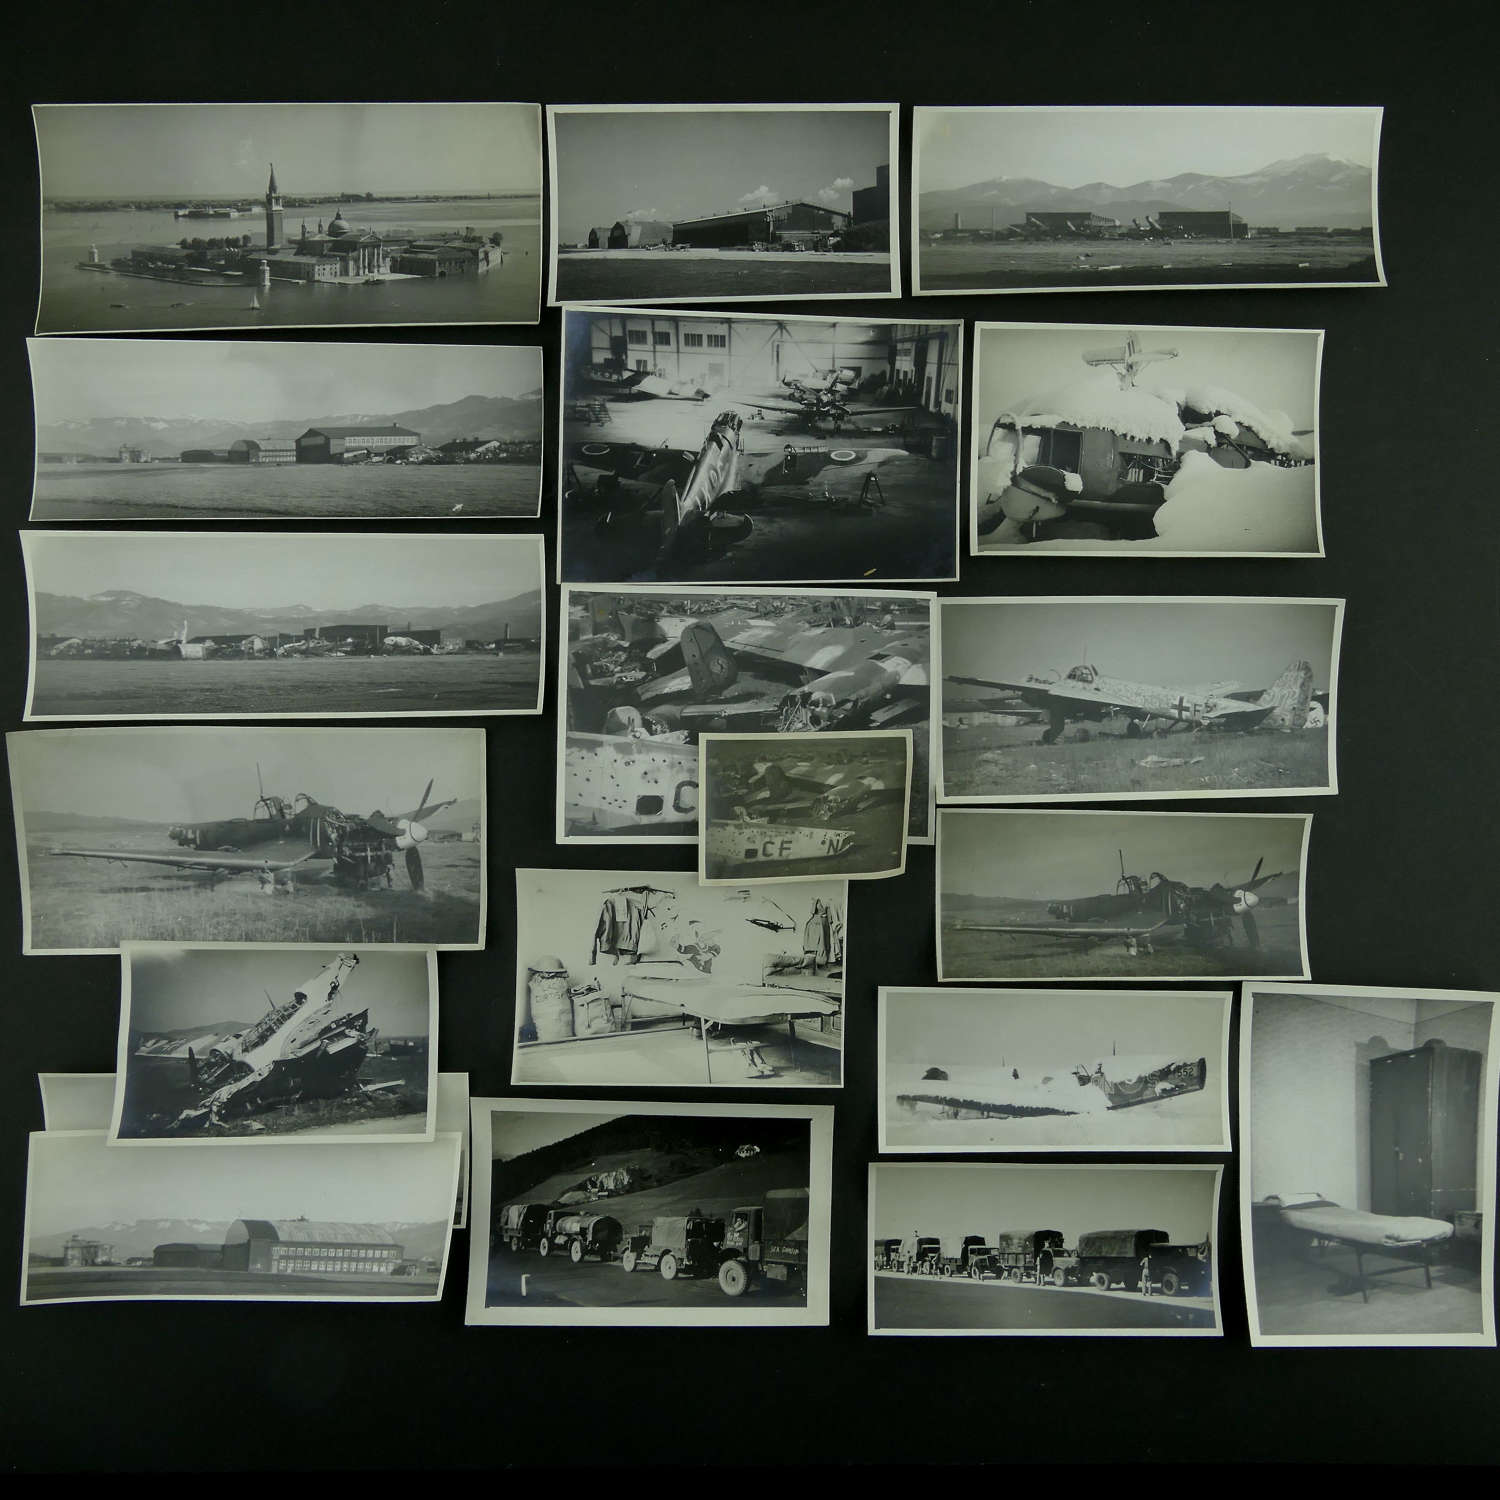 Photographs of damaged aircraft, Italy